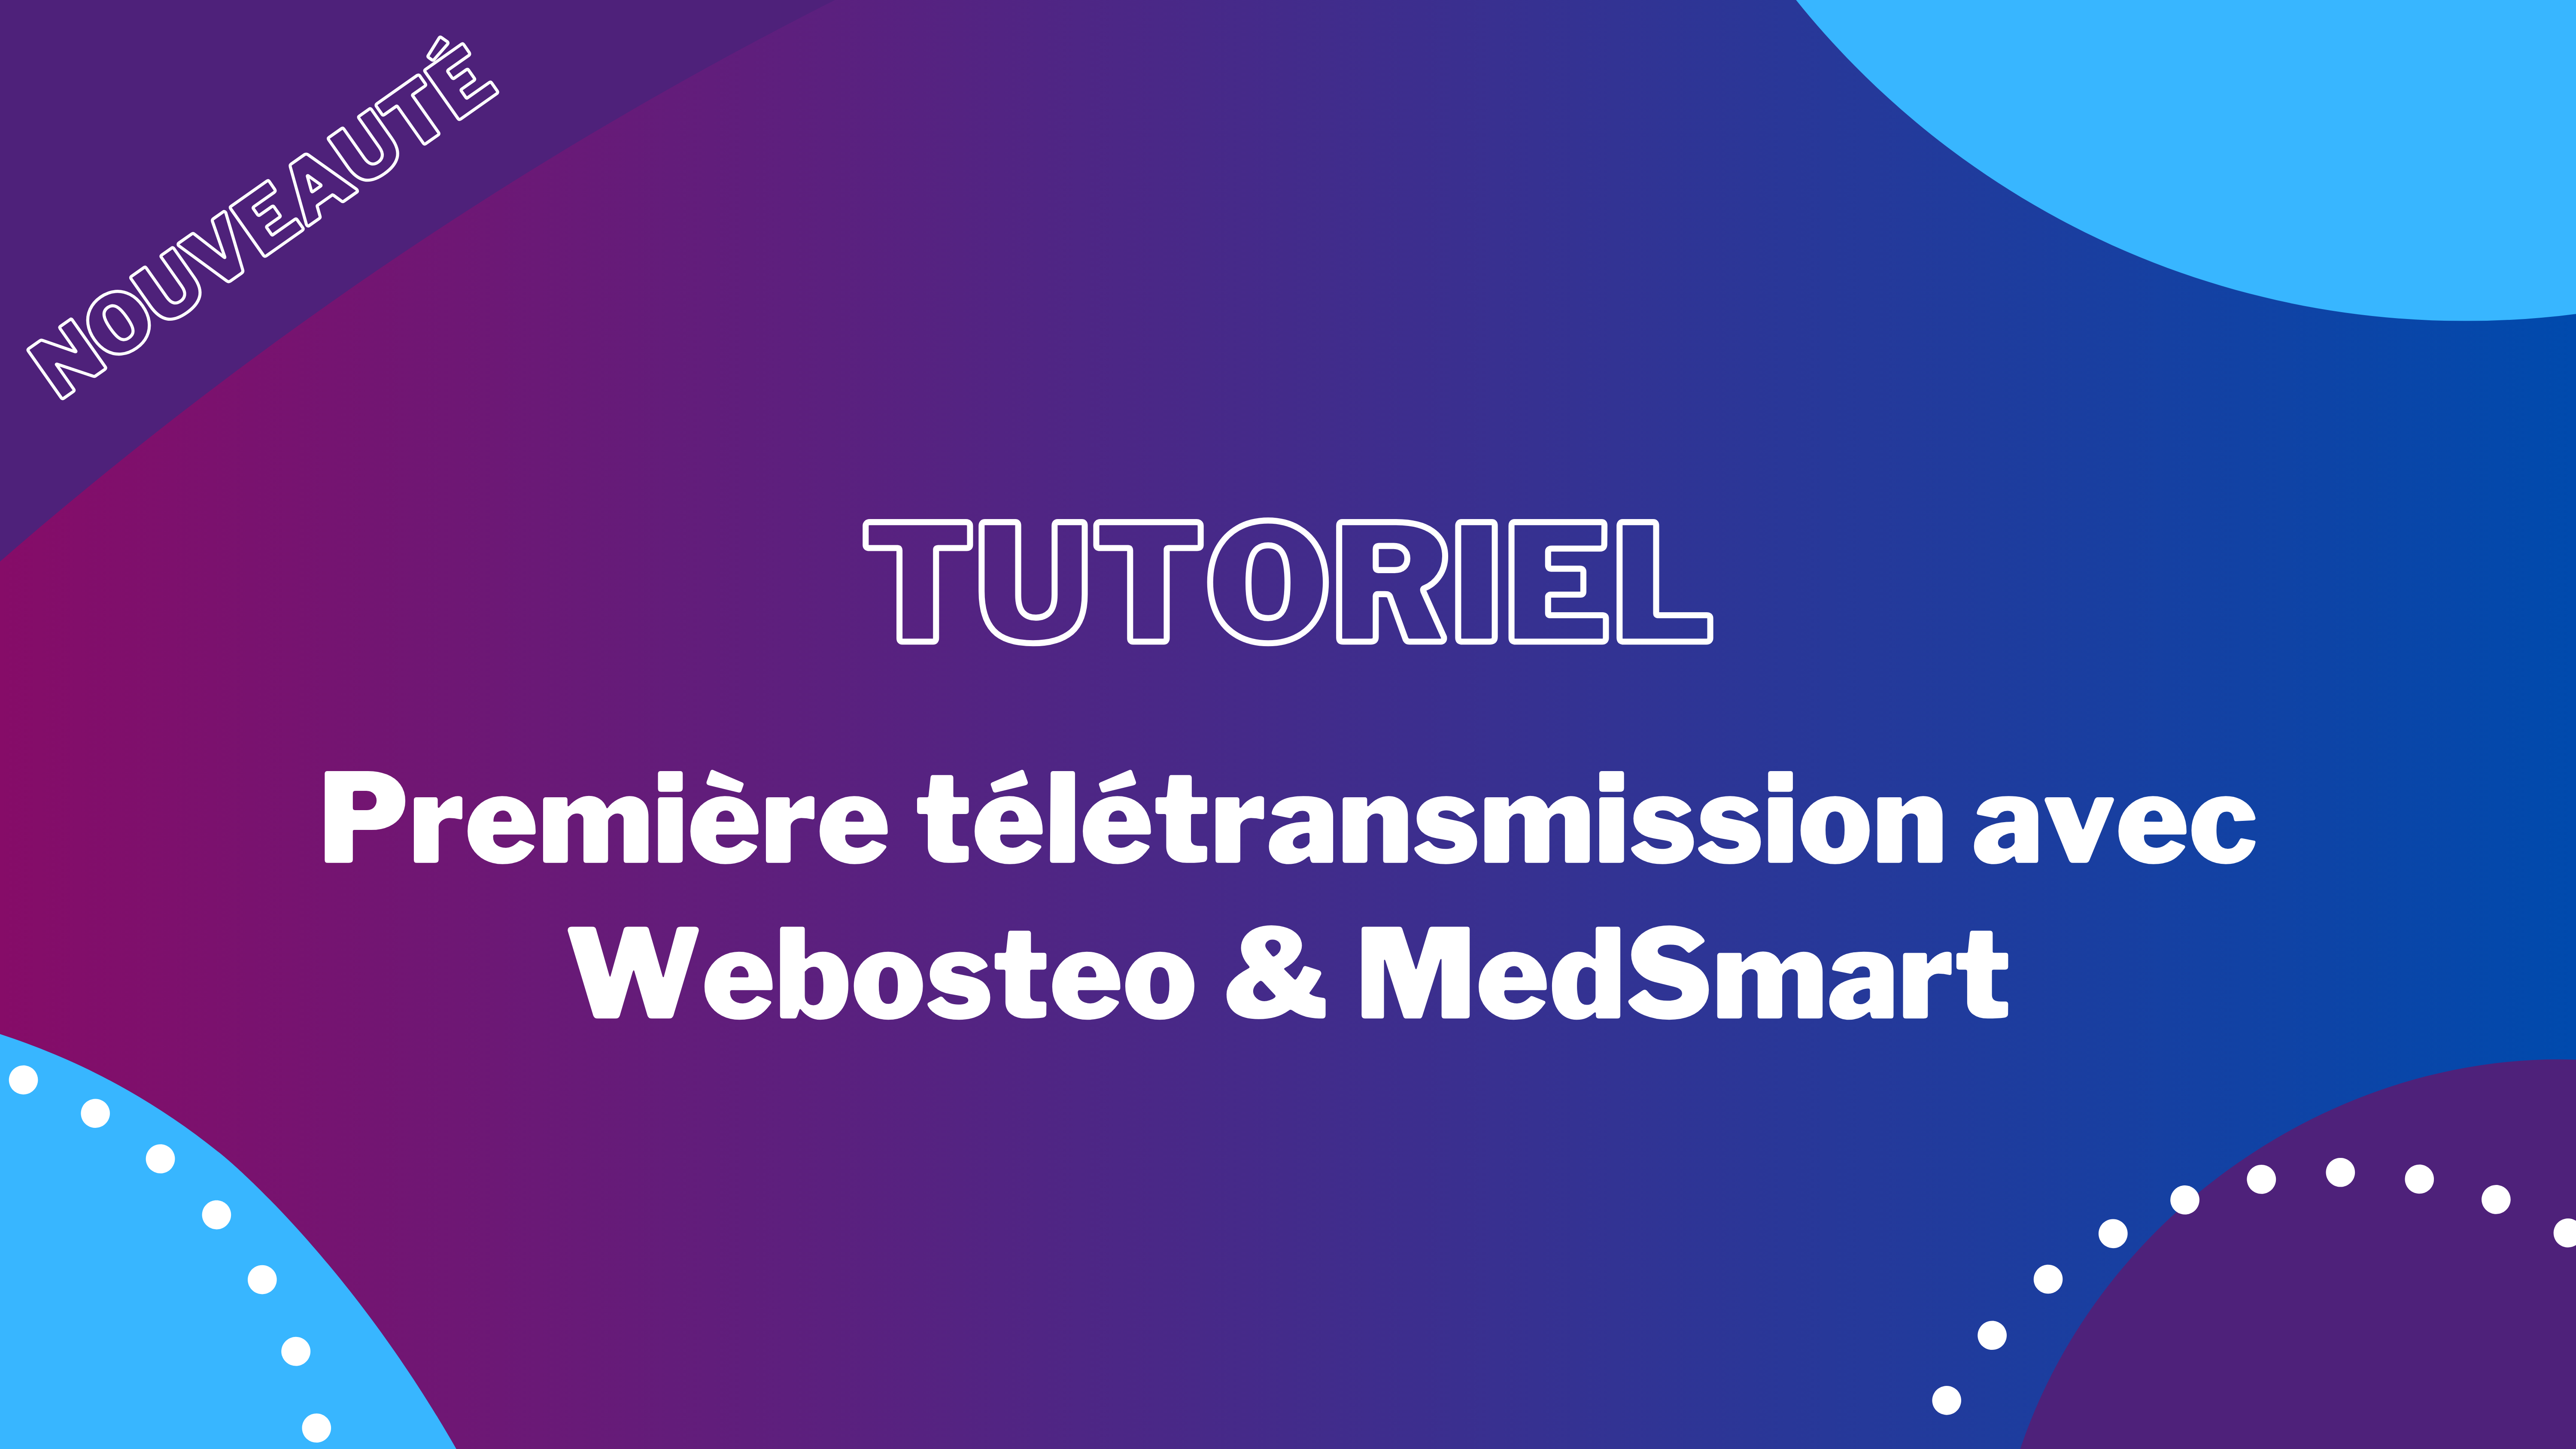 Première télétransmission avec Webosteo & MedSmart